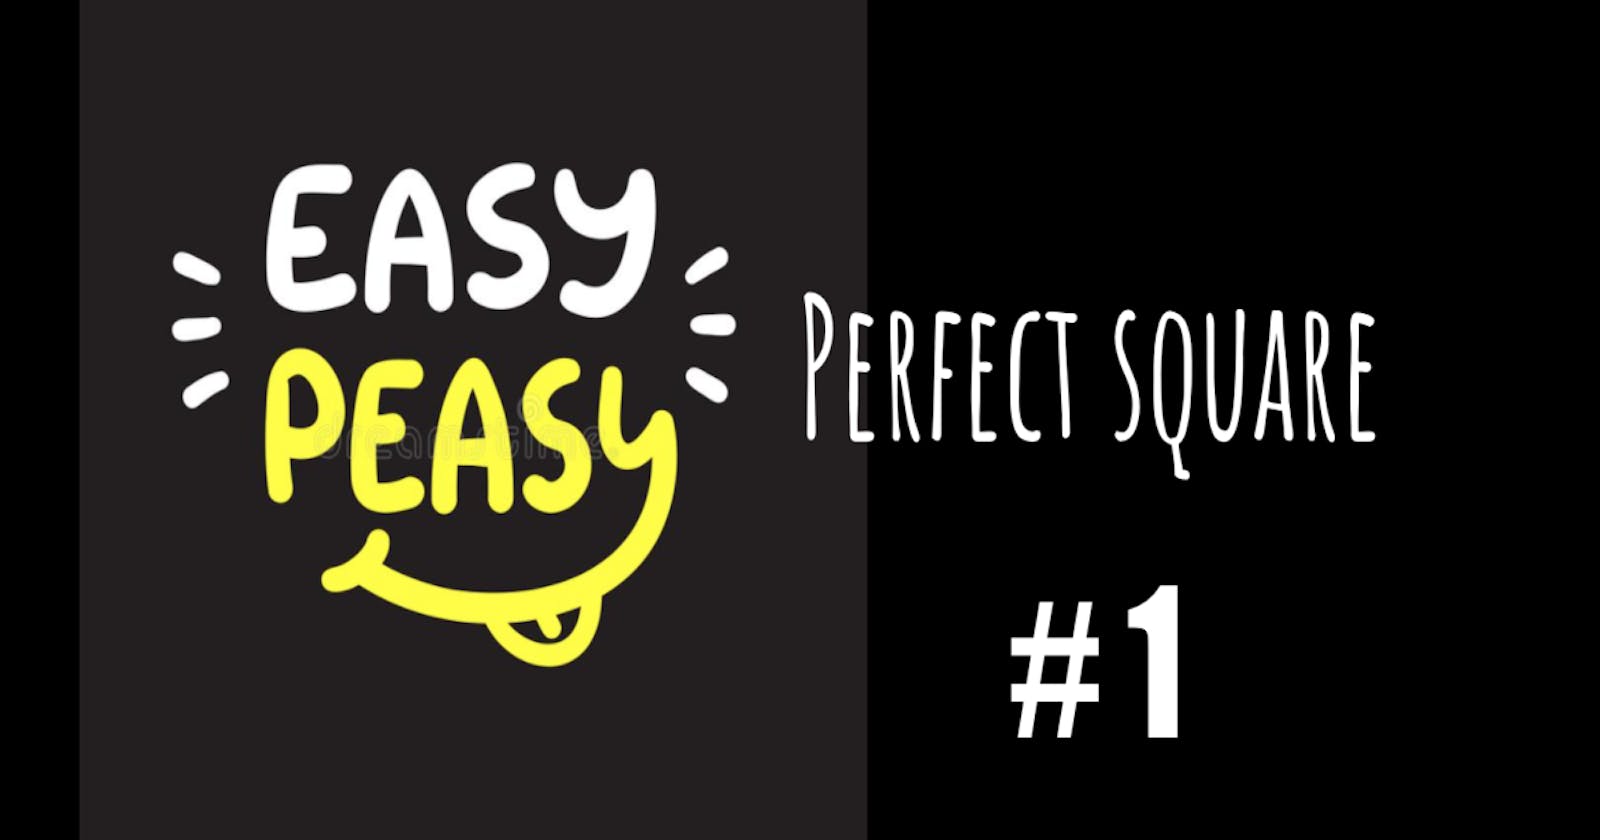 Easy peasy perfect square